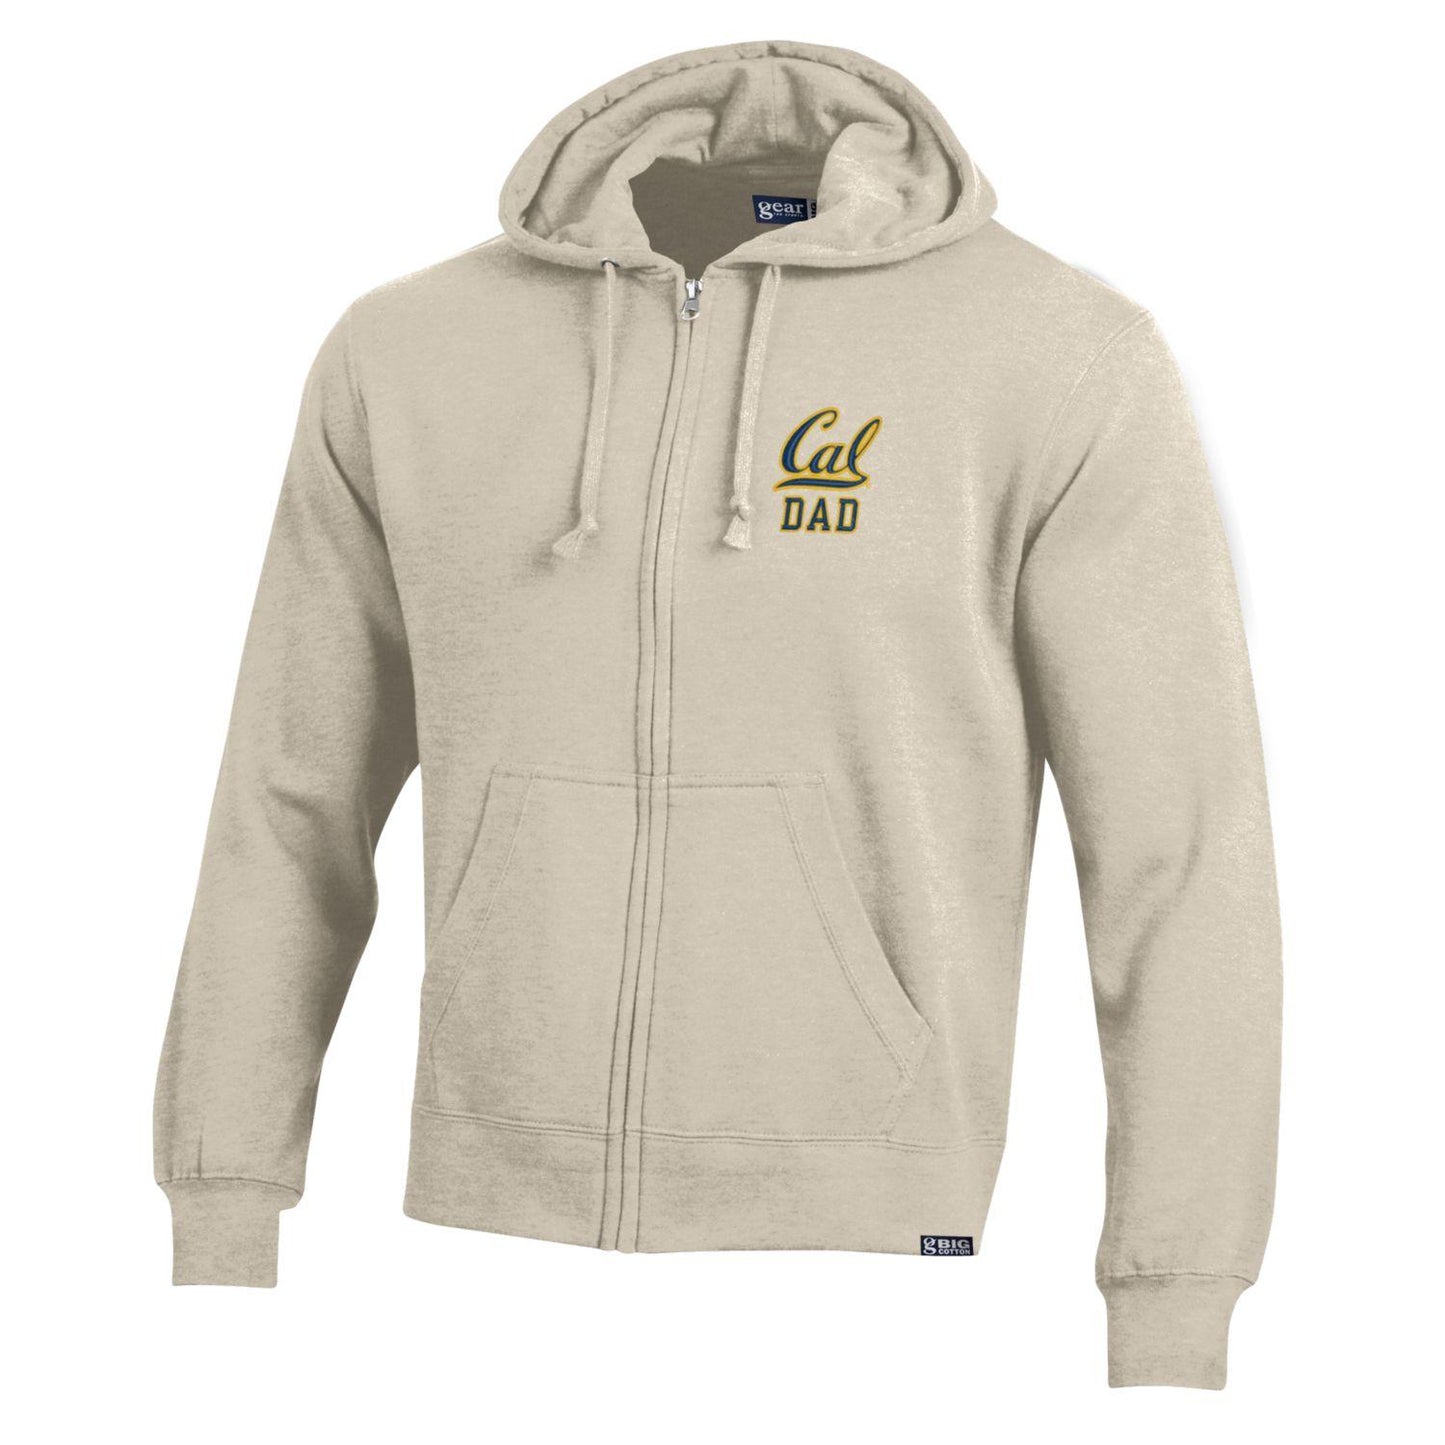 U.C. Berkeley Cal Dad embroidered left chest cotton rich zip-up hoodie sweatshirt- Oatmeal-Shop College Wear